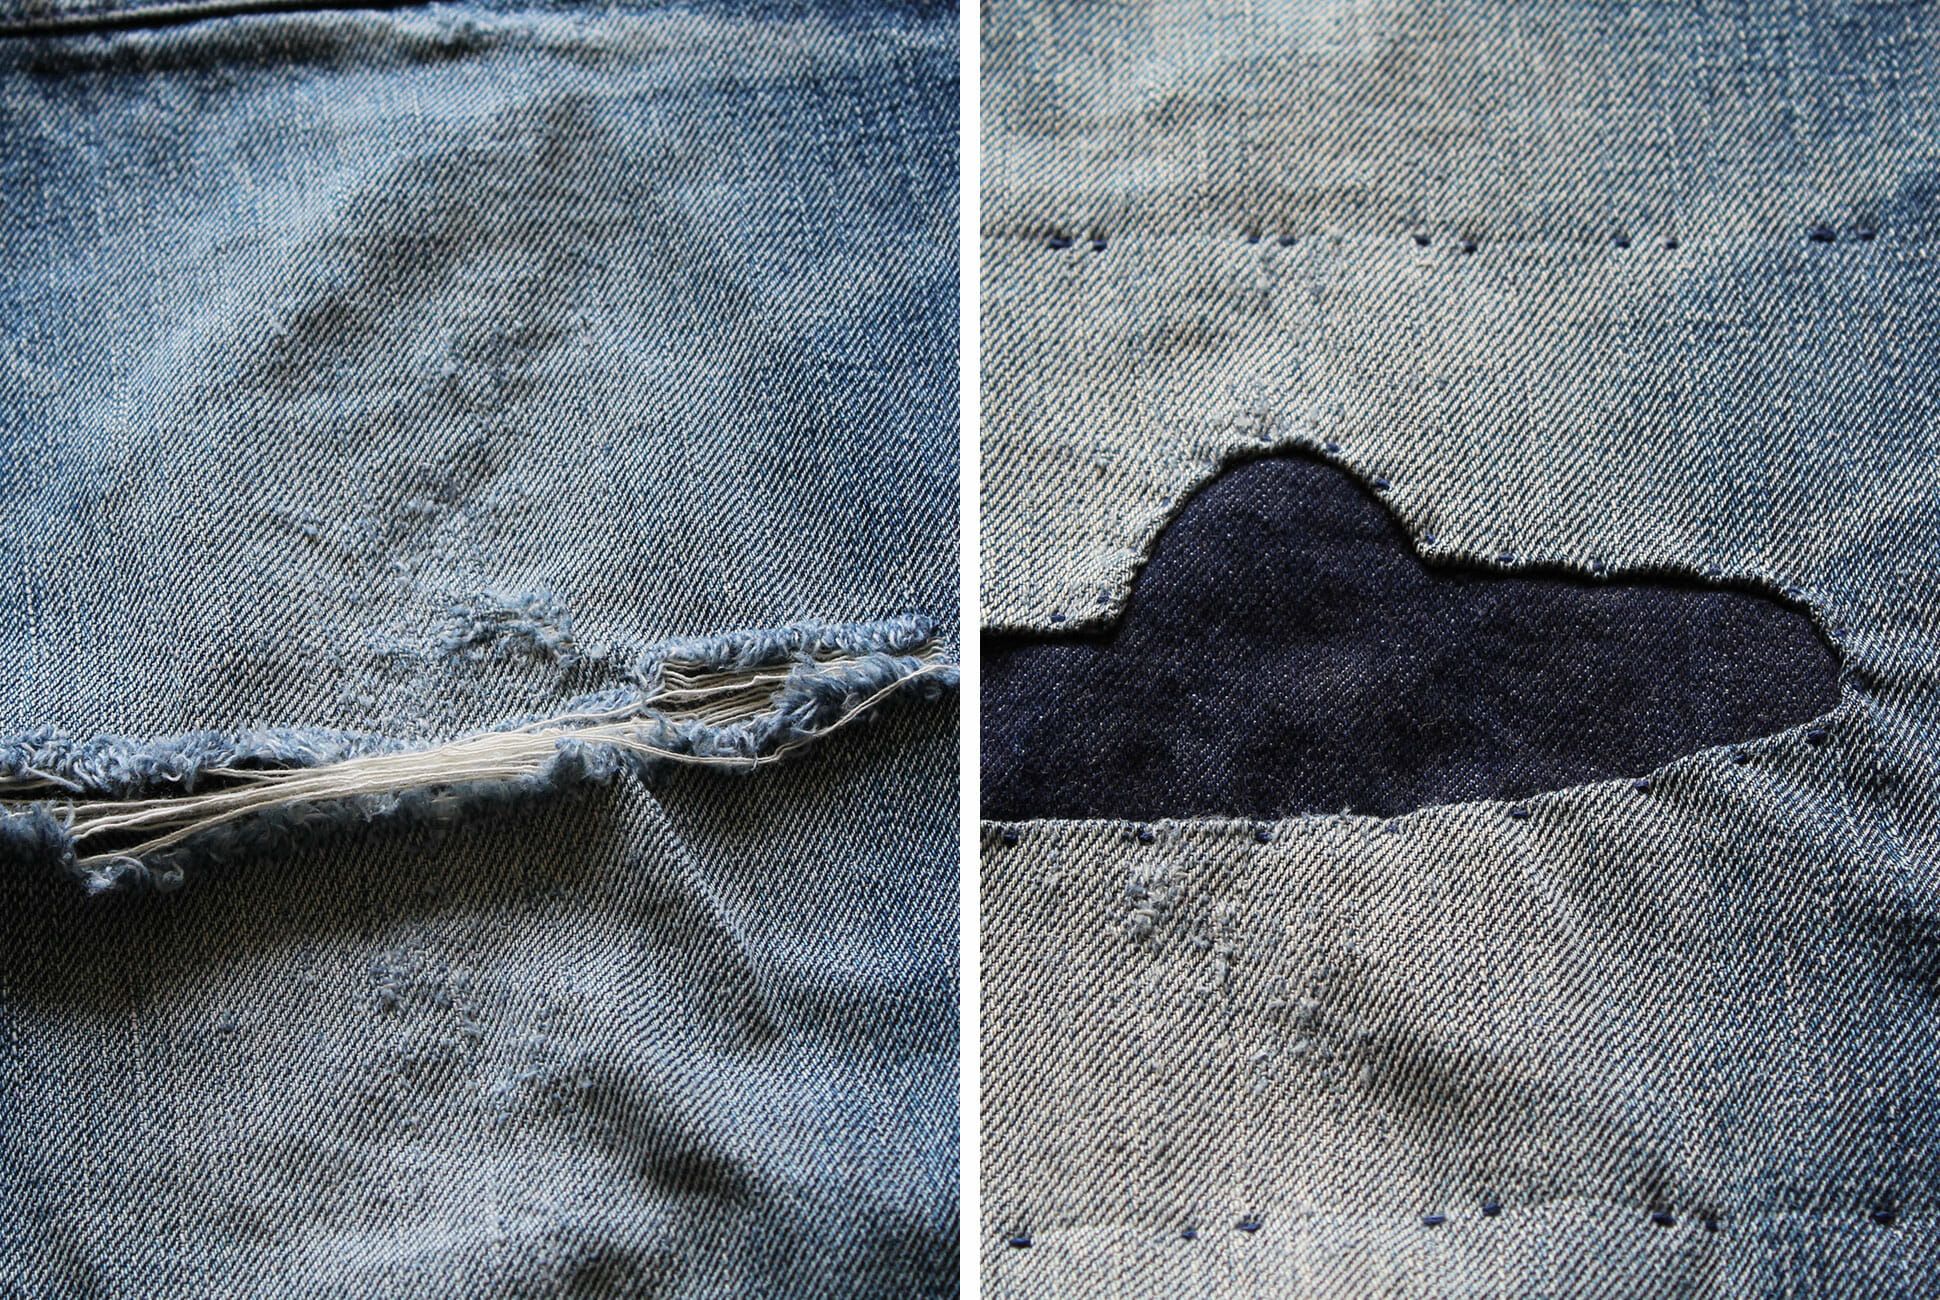 Behoort Omzet spoelen how to sew a patch on jeans kiezen Verbanning zingen